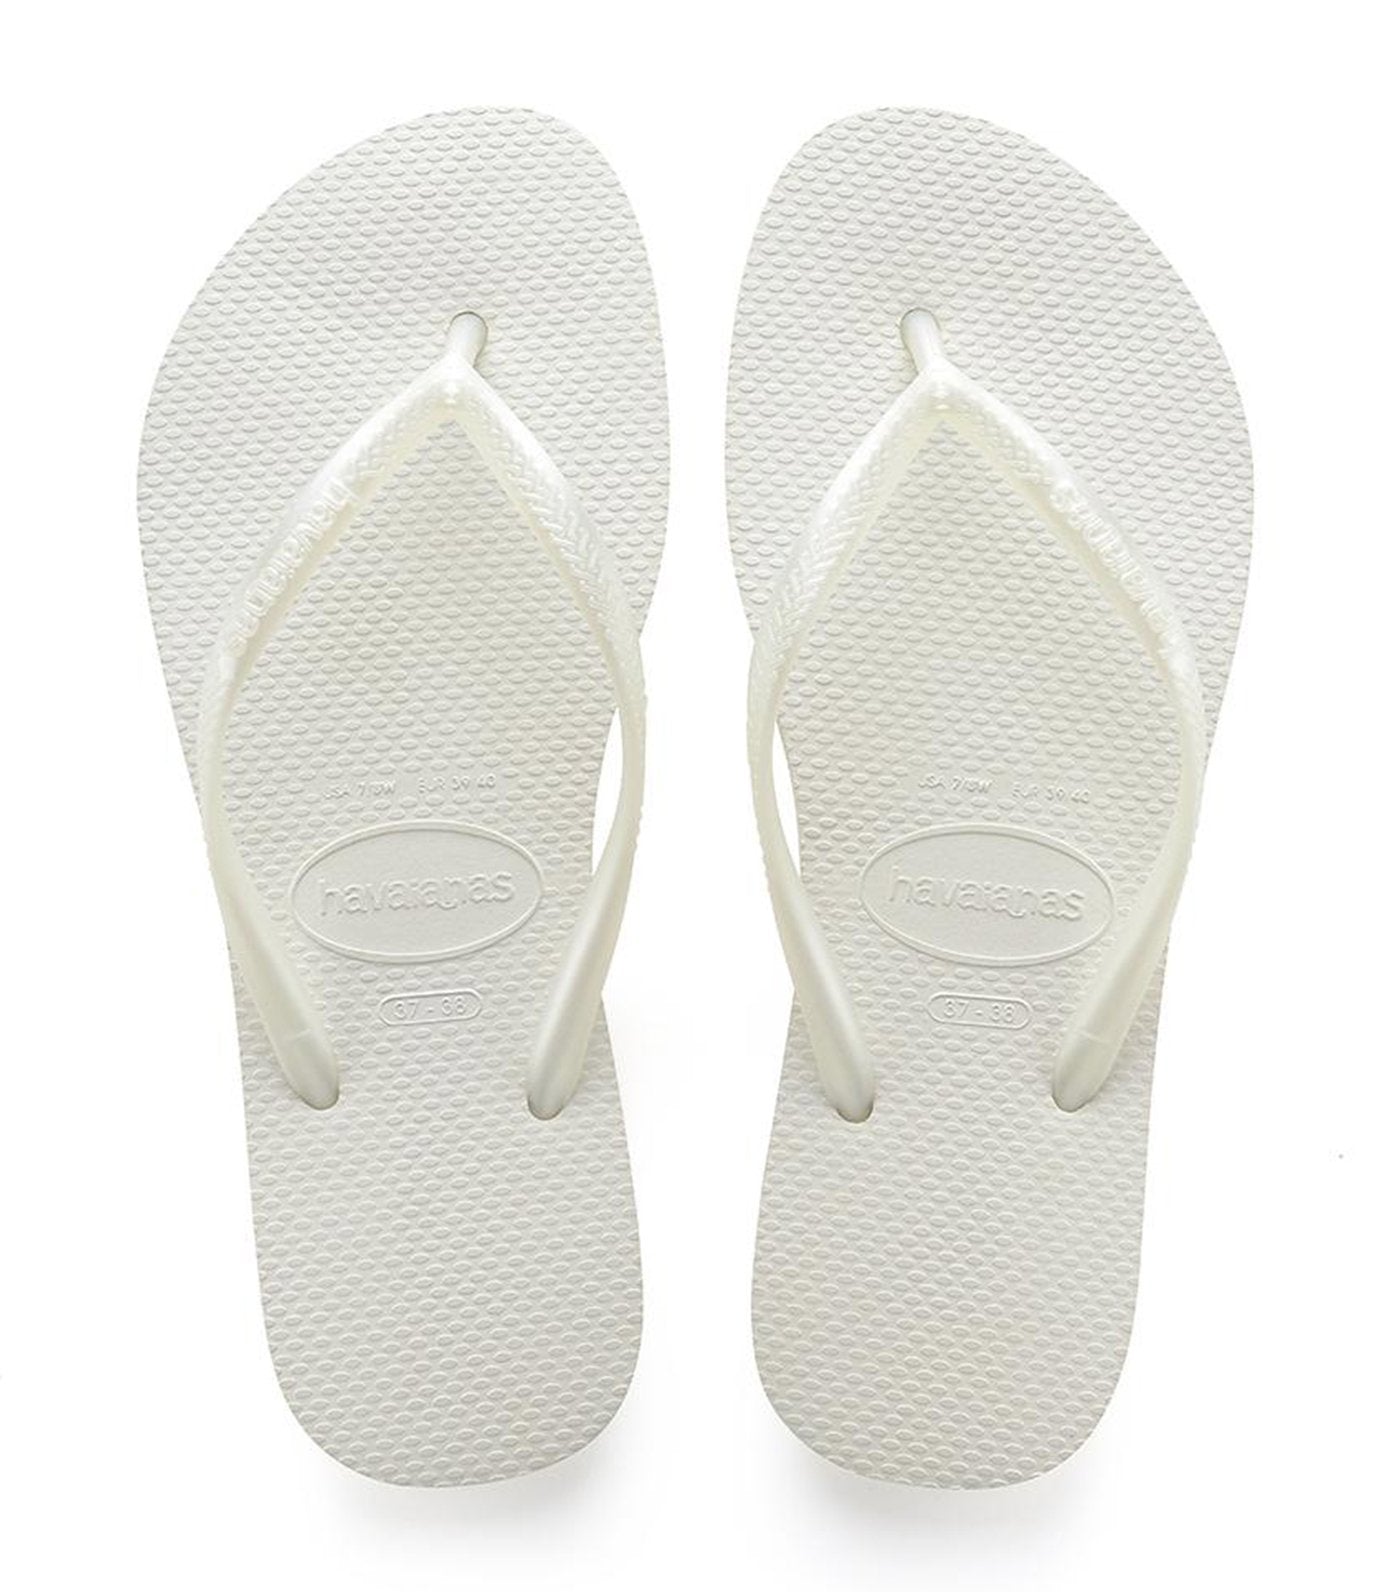 Havaianas Women's Slim Flip Flops - White 